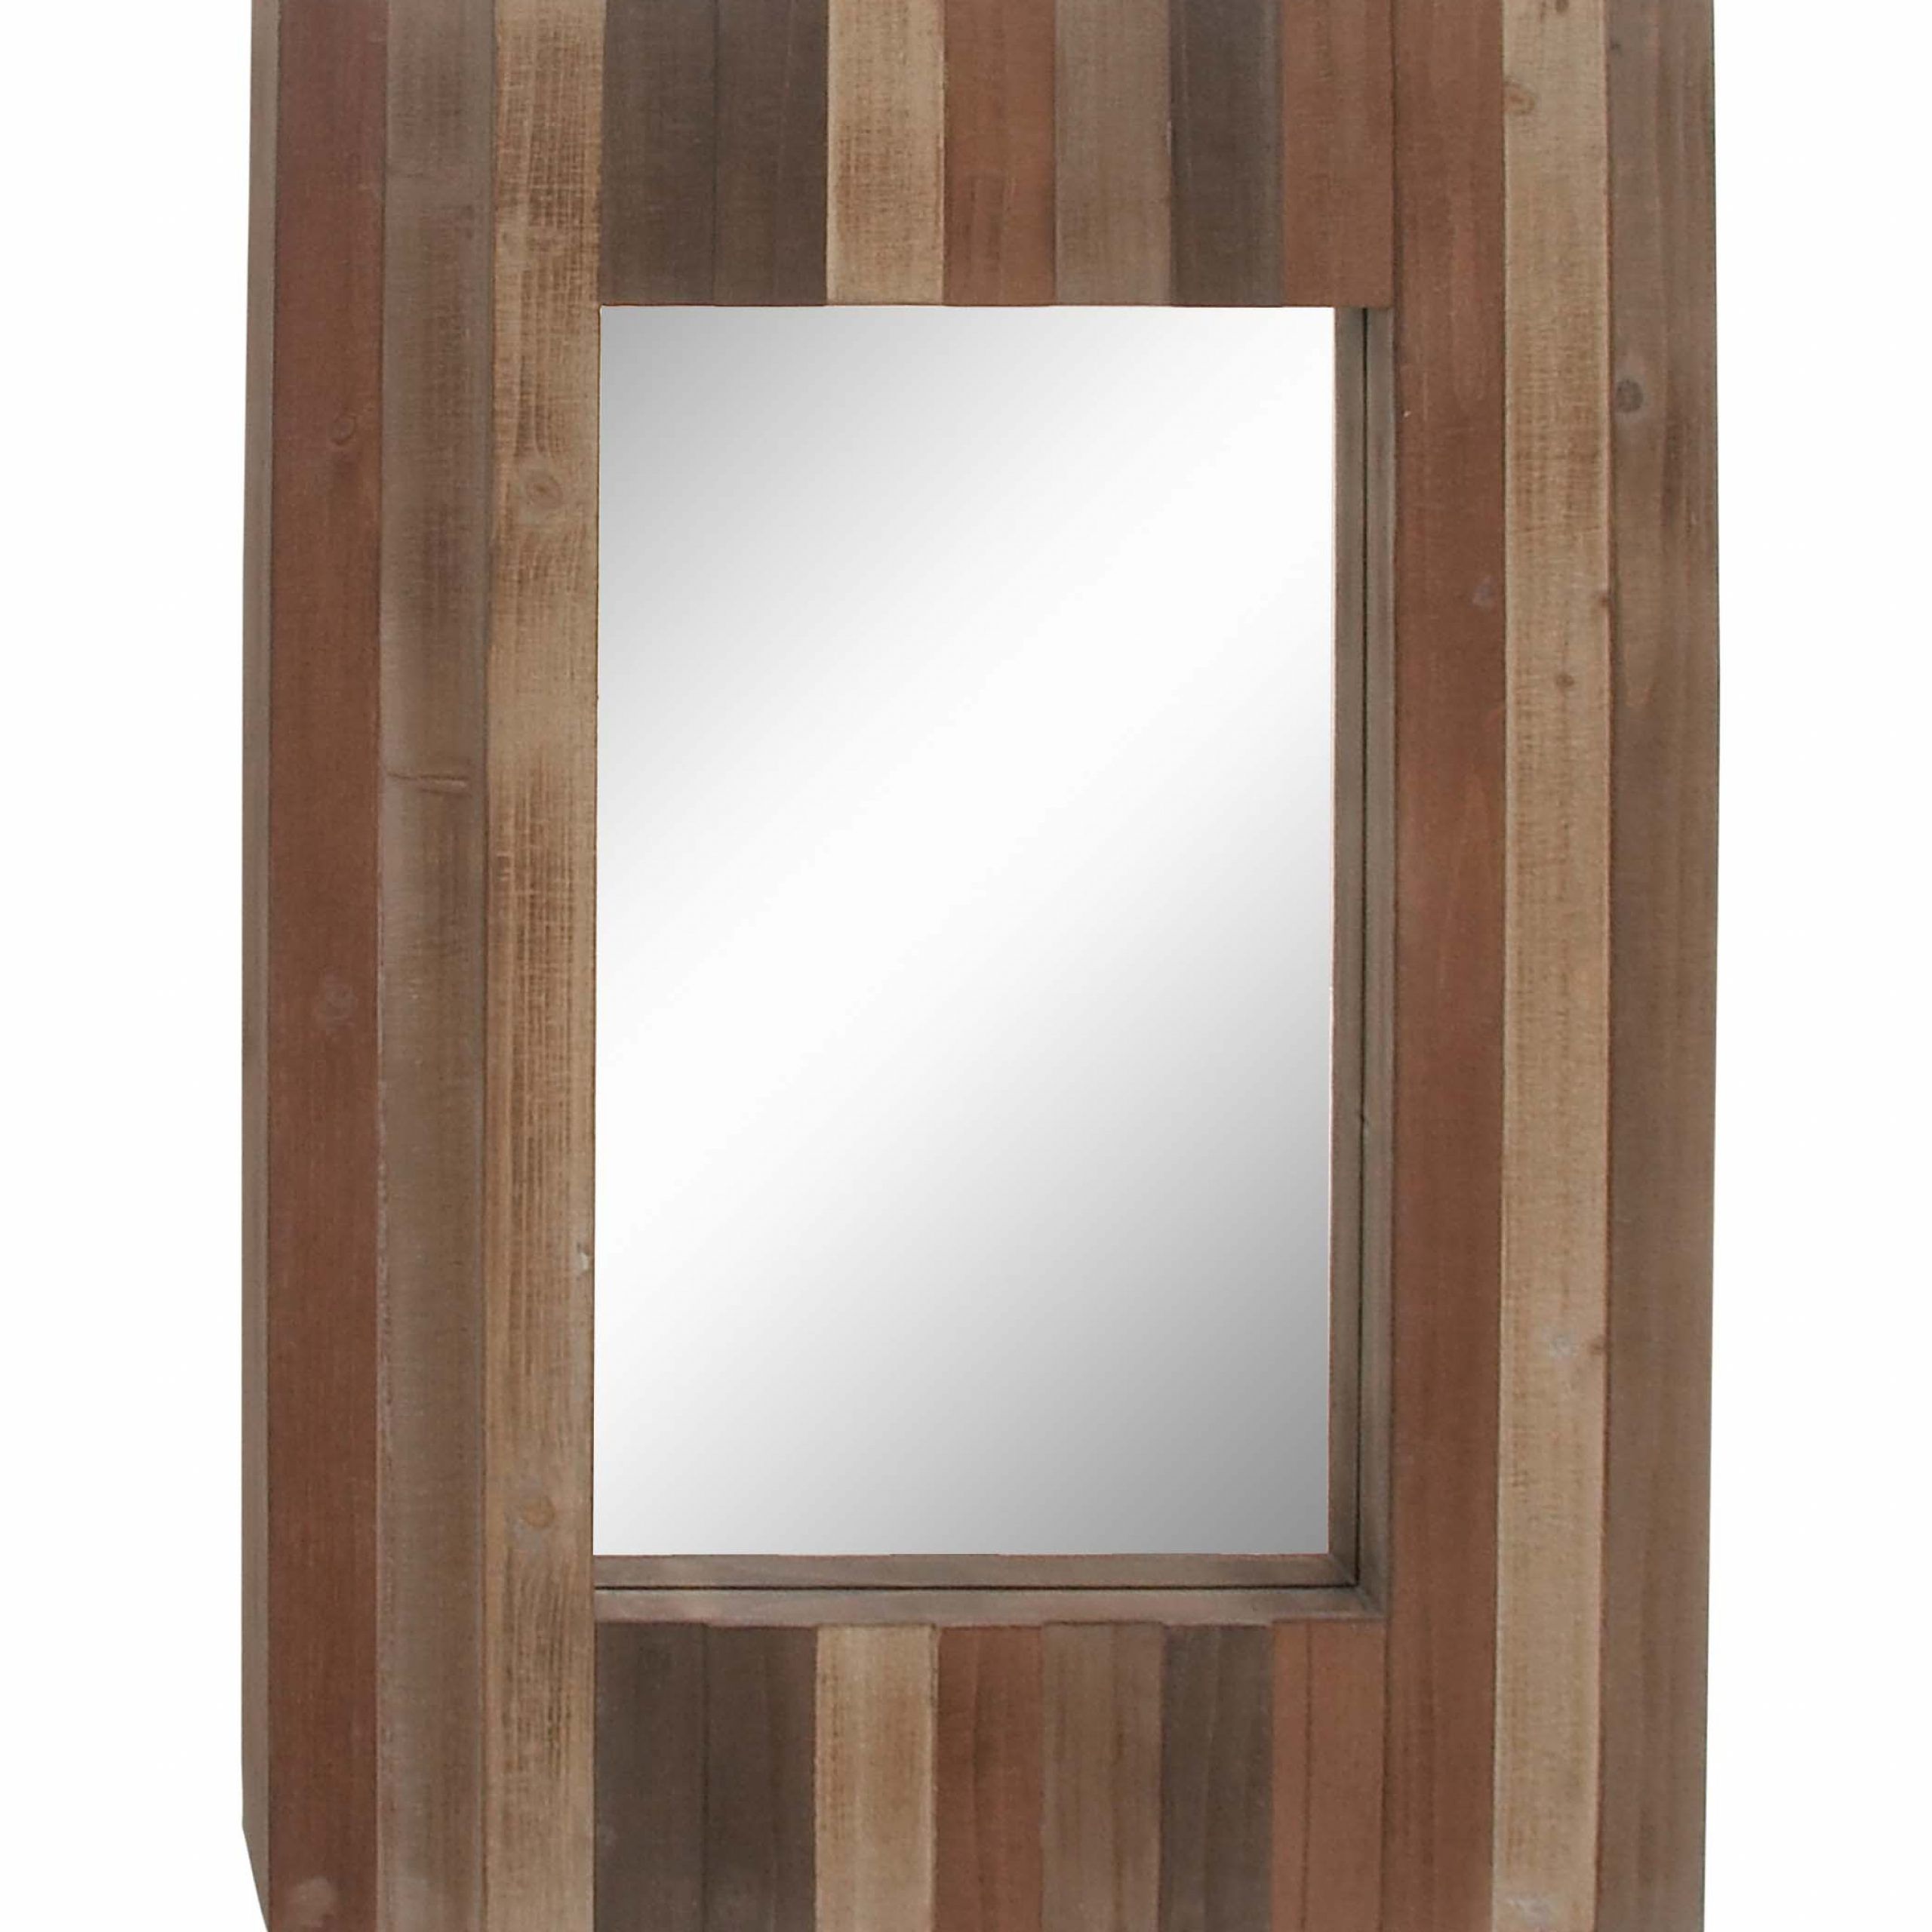 Decmode Rectangular 38 X 28 Inch Slat Style Wood Wall Mirror, Dark With Natural Iron Rectangular Wall Mirrors (View 1 of 15)